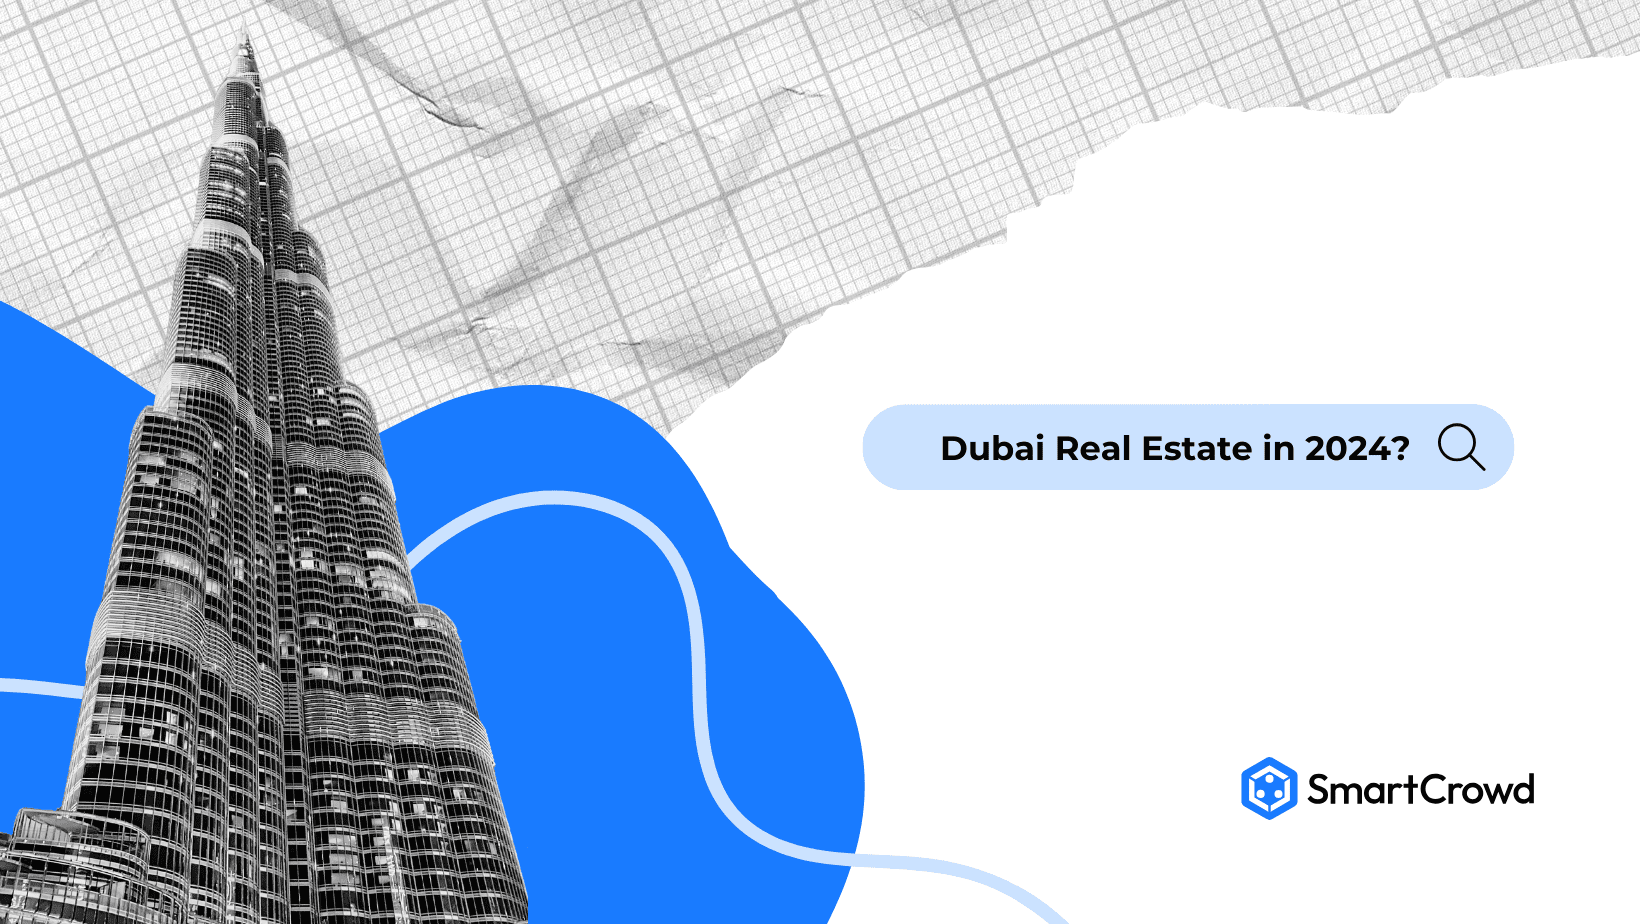 Dubai Real Estate Market Strong Growth or Slowdown in 2024?